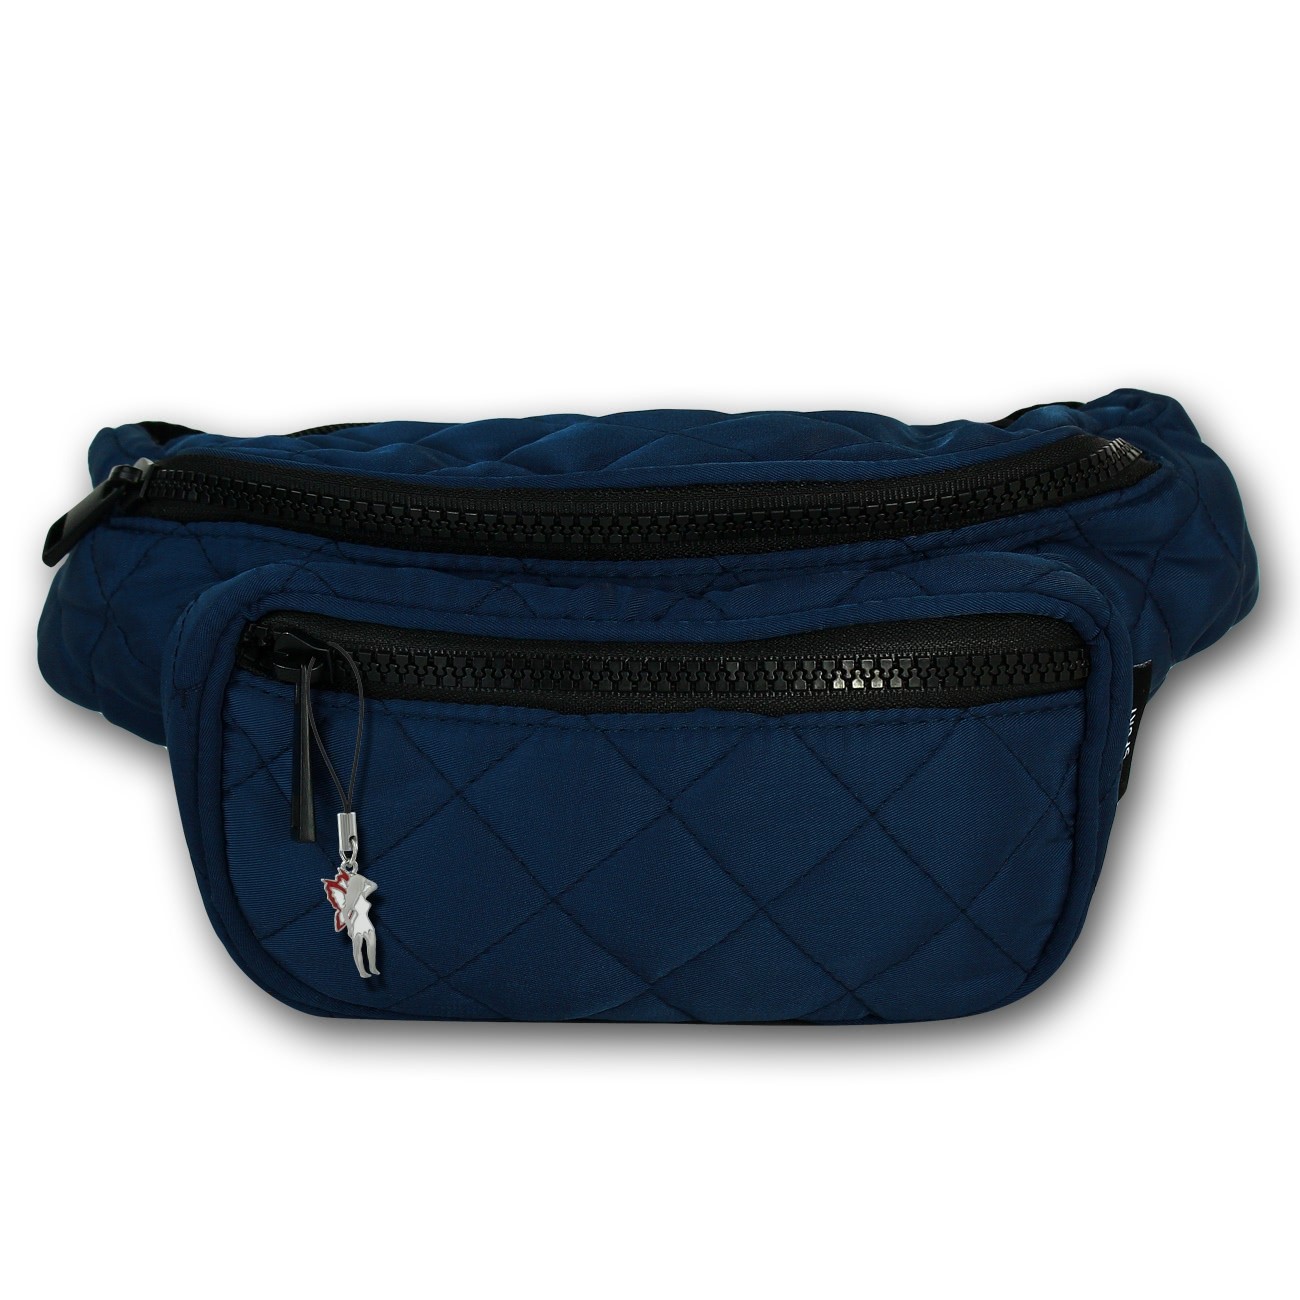 New Bags sportliche gesteppte Gürteltasche - too cool for you - navy OTD5026B